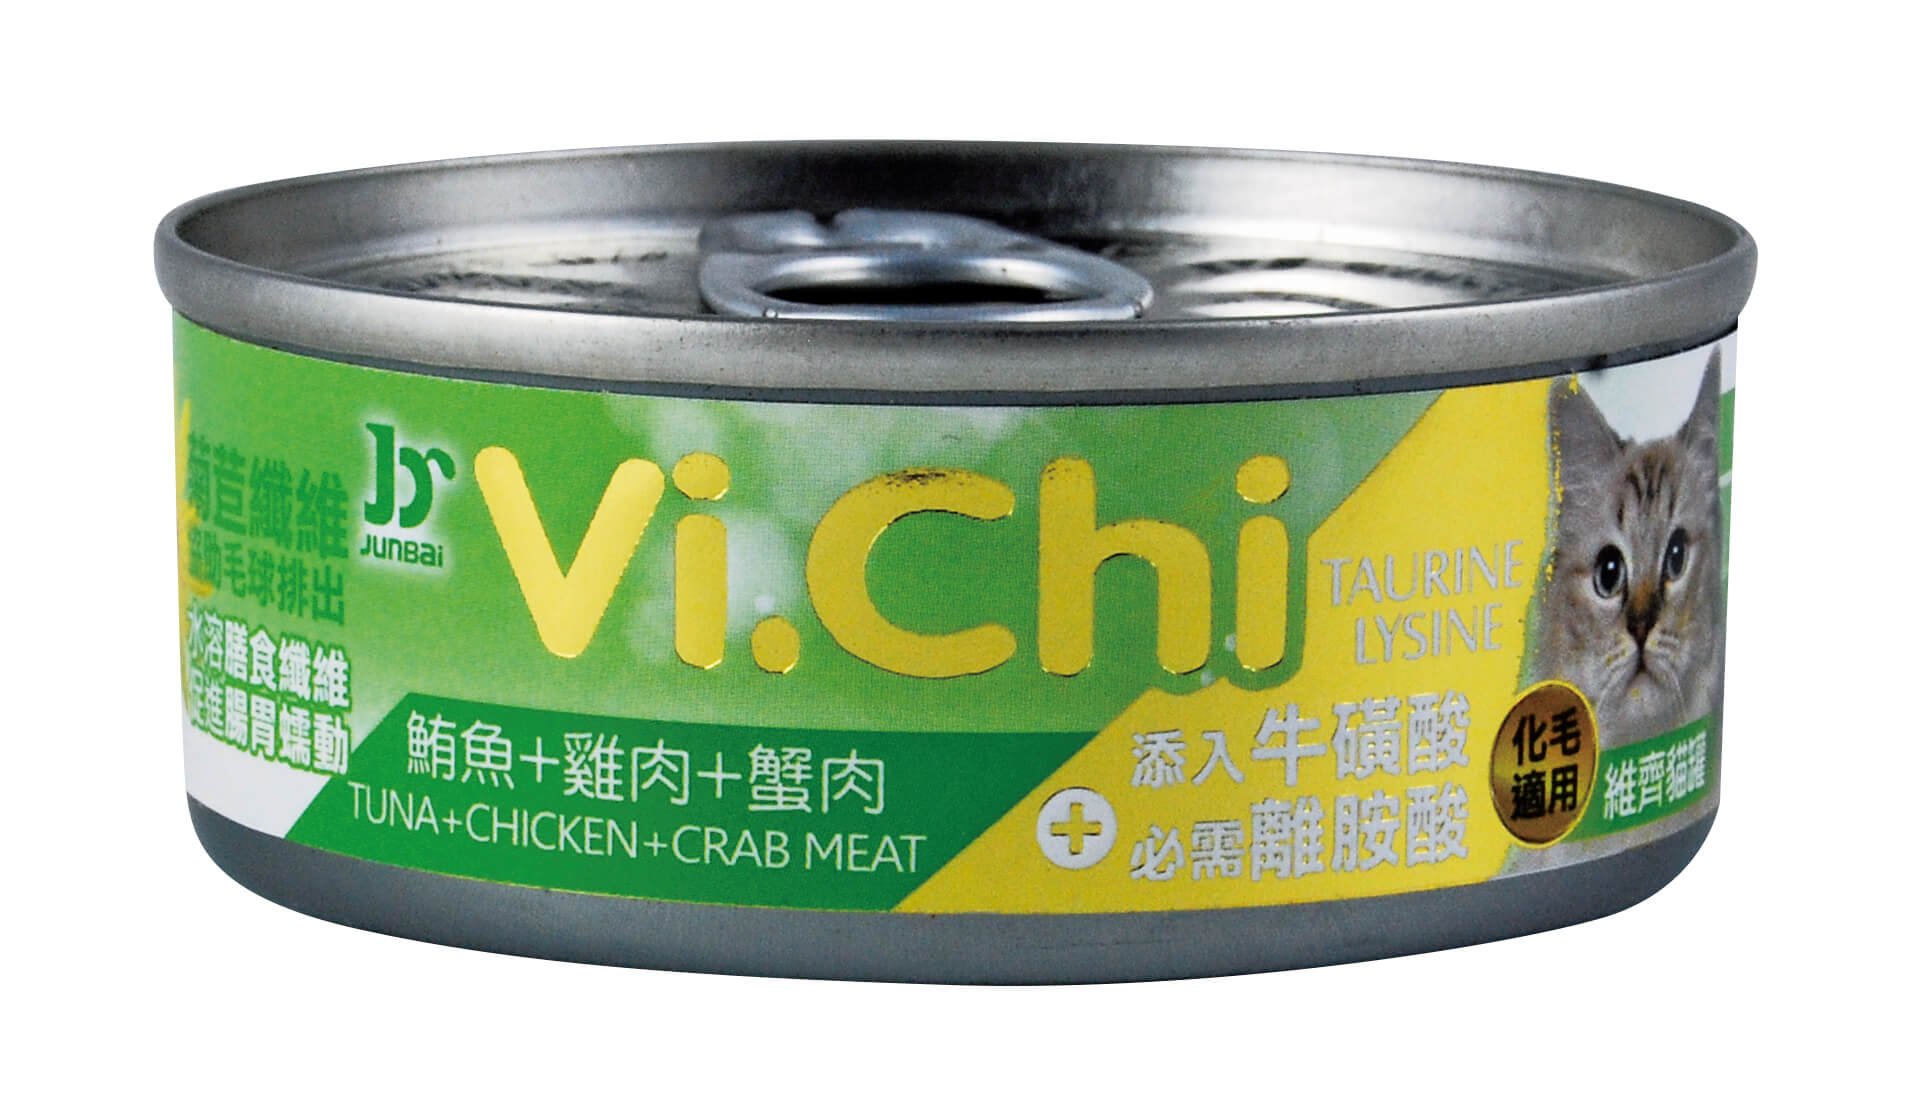 維齊貓罐-鮪魚+雞肉+蟹肉
Vi.Chi cat can-tuna+chicken+crab meat